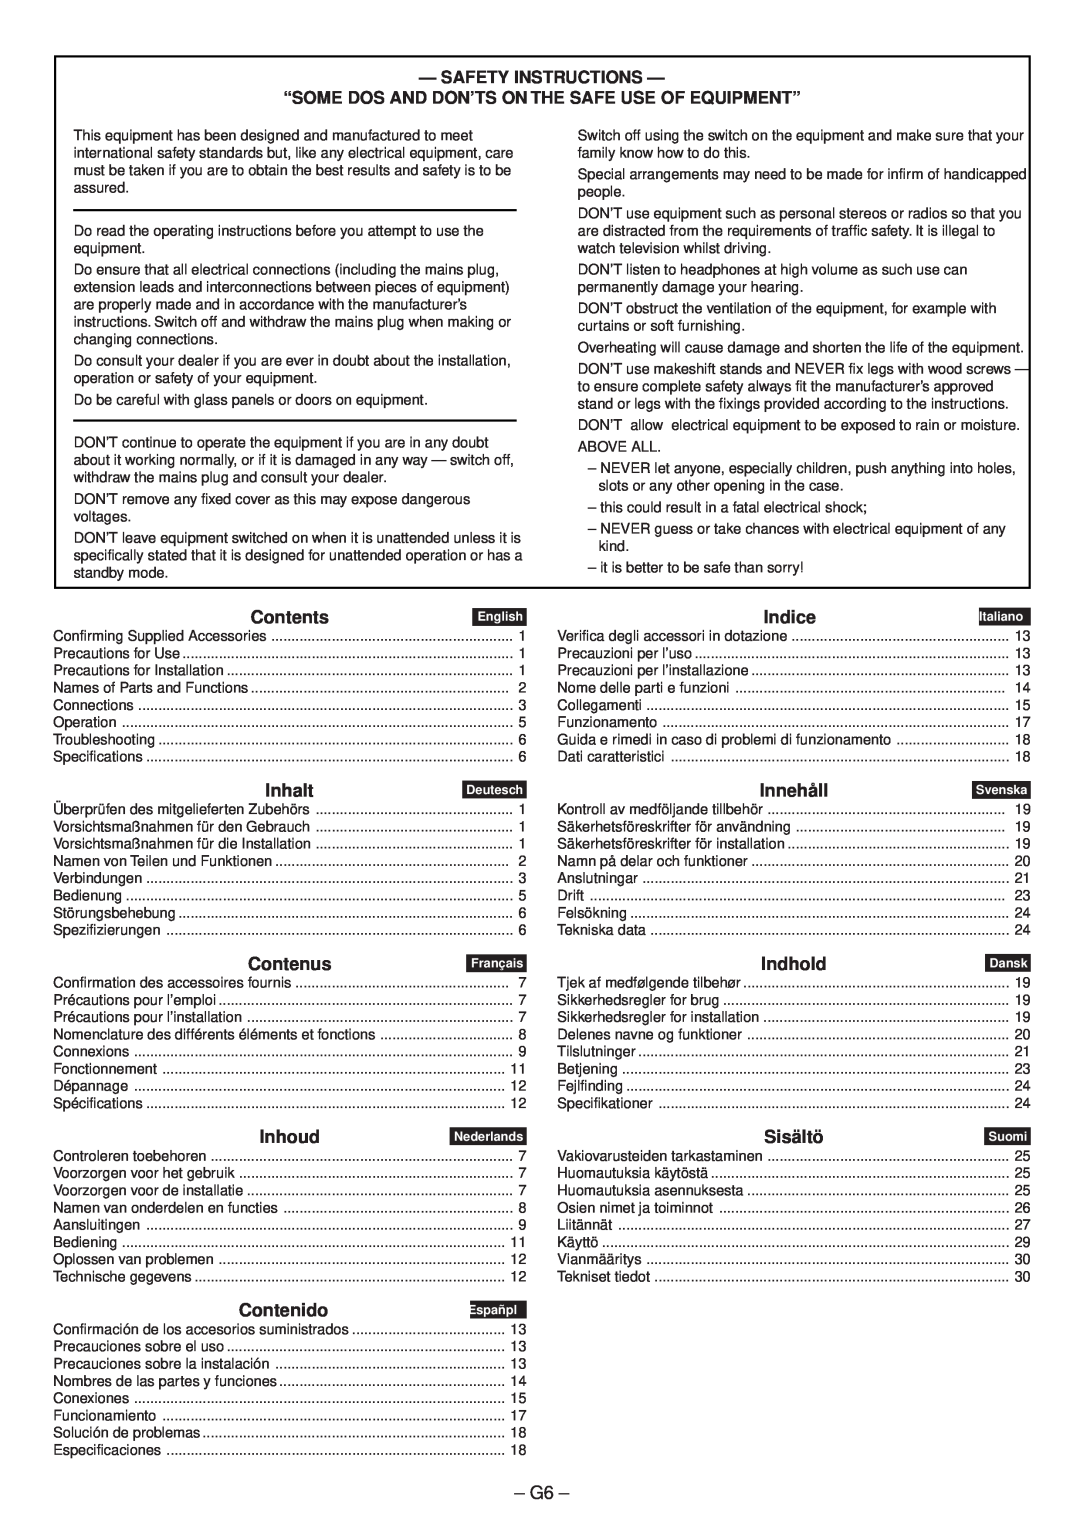 JVC LVT0673-001A manual Contents, Inhalt, Indic e, Innehål l, Indhol d, Sisältö, Contenid, G6 